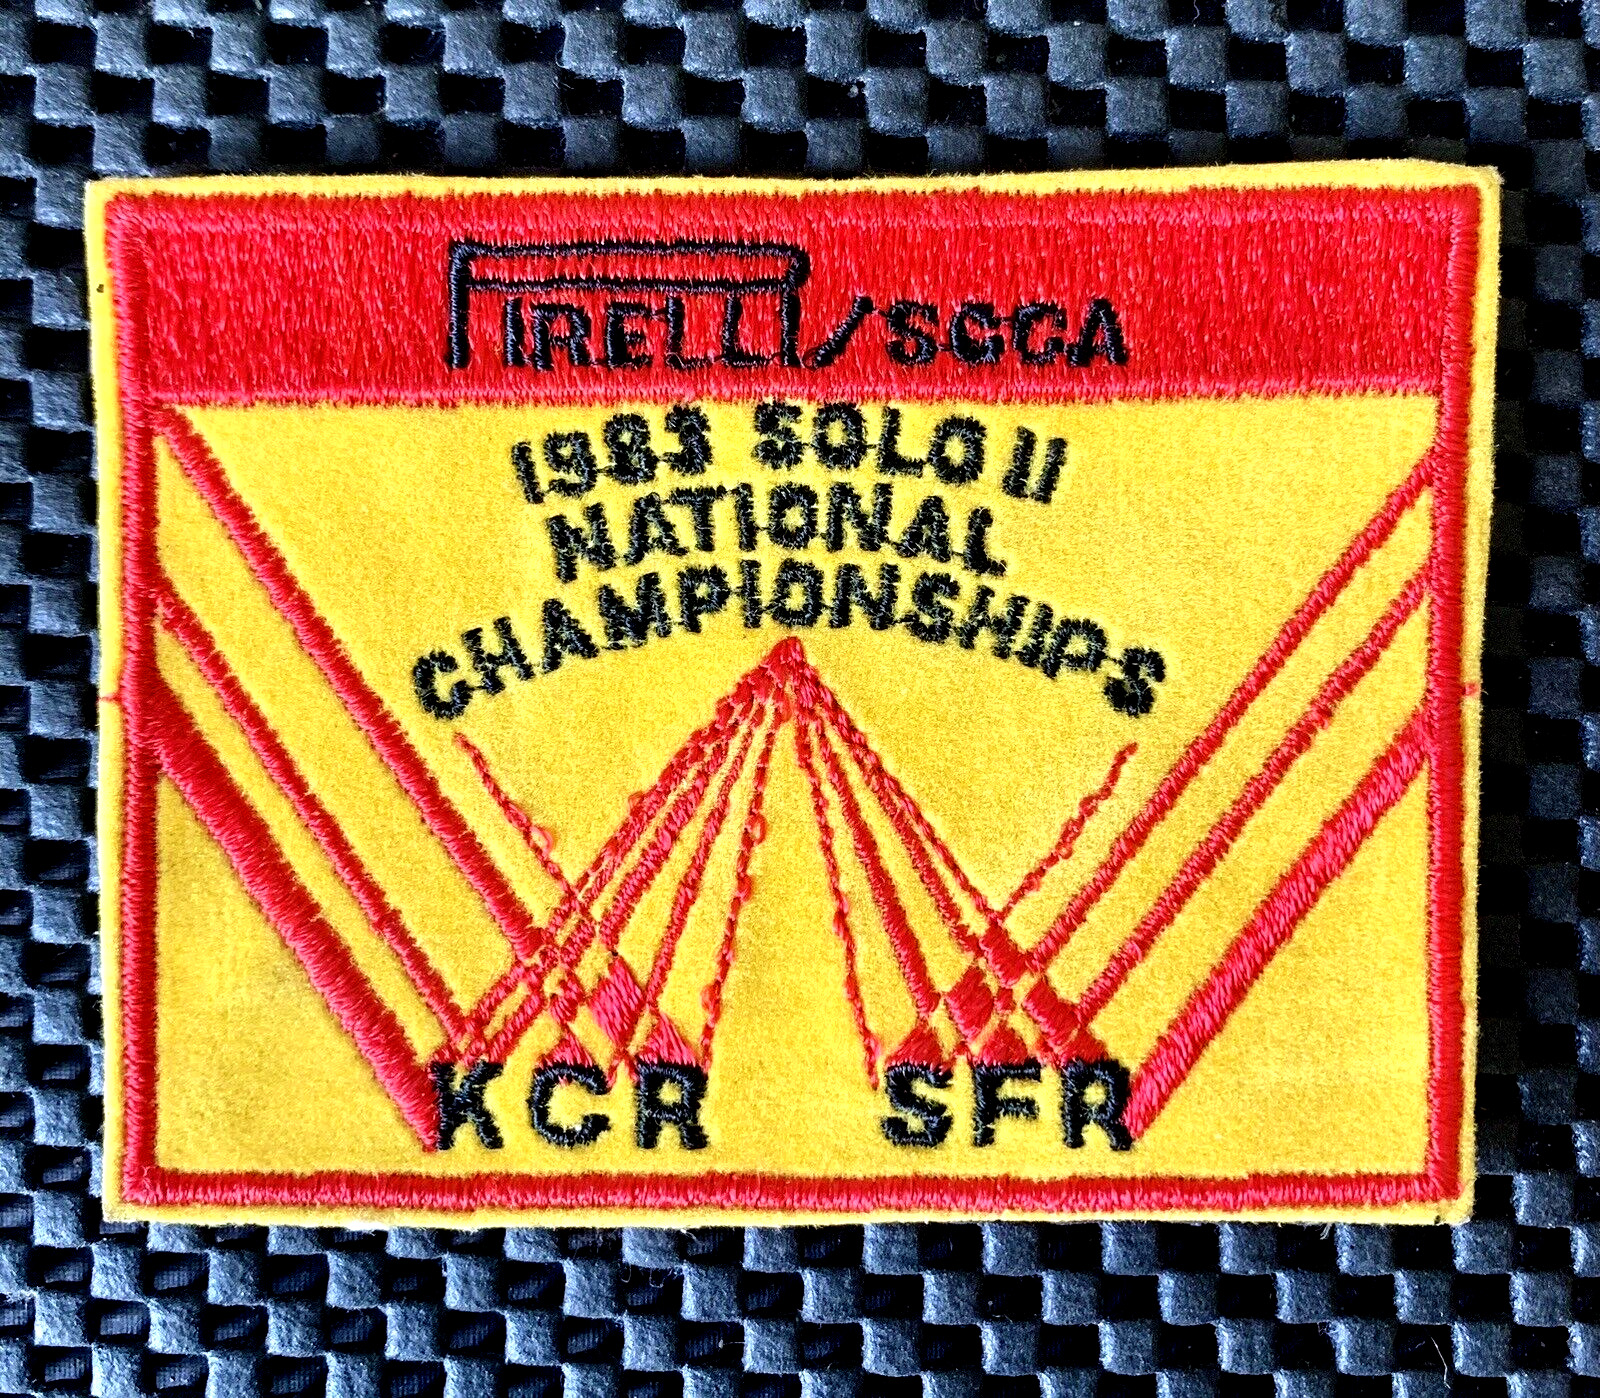 PIRELLI SCCA 1983 SOLO II NATIONAL CHAMPIONSHIPS KCR SFR SEW ON PATCH 4 x 3